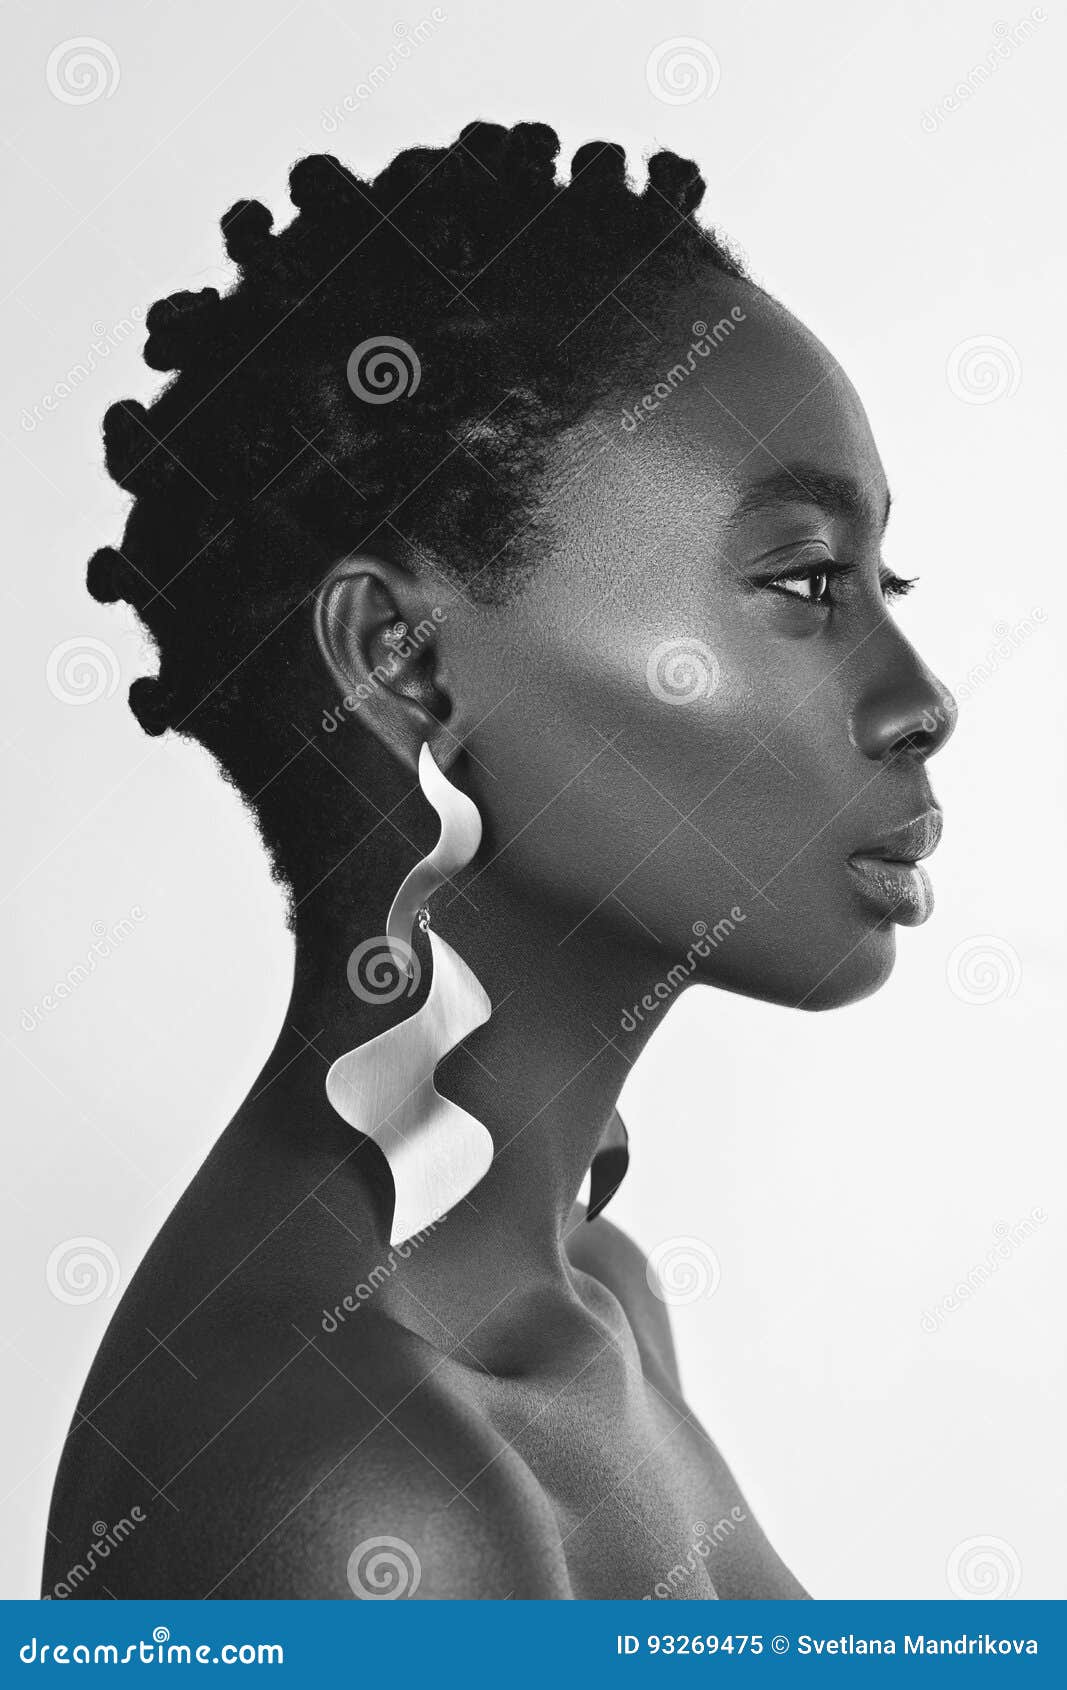 Beautiful Black Girl with Big Earrings Stock Image - Image of head